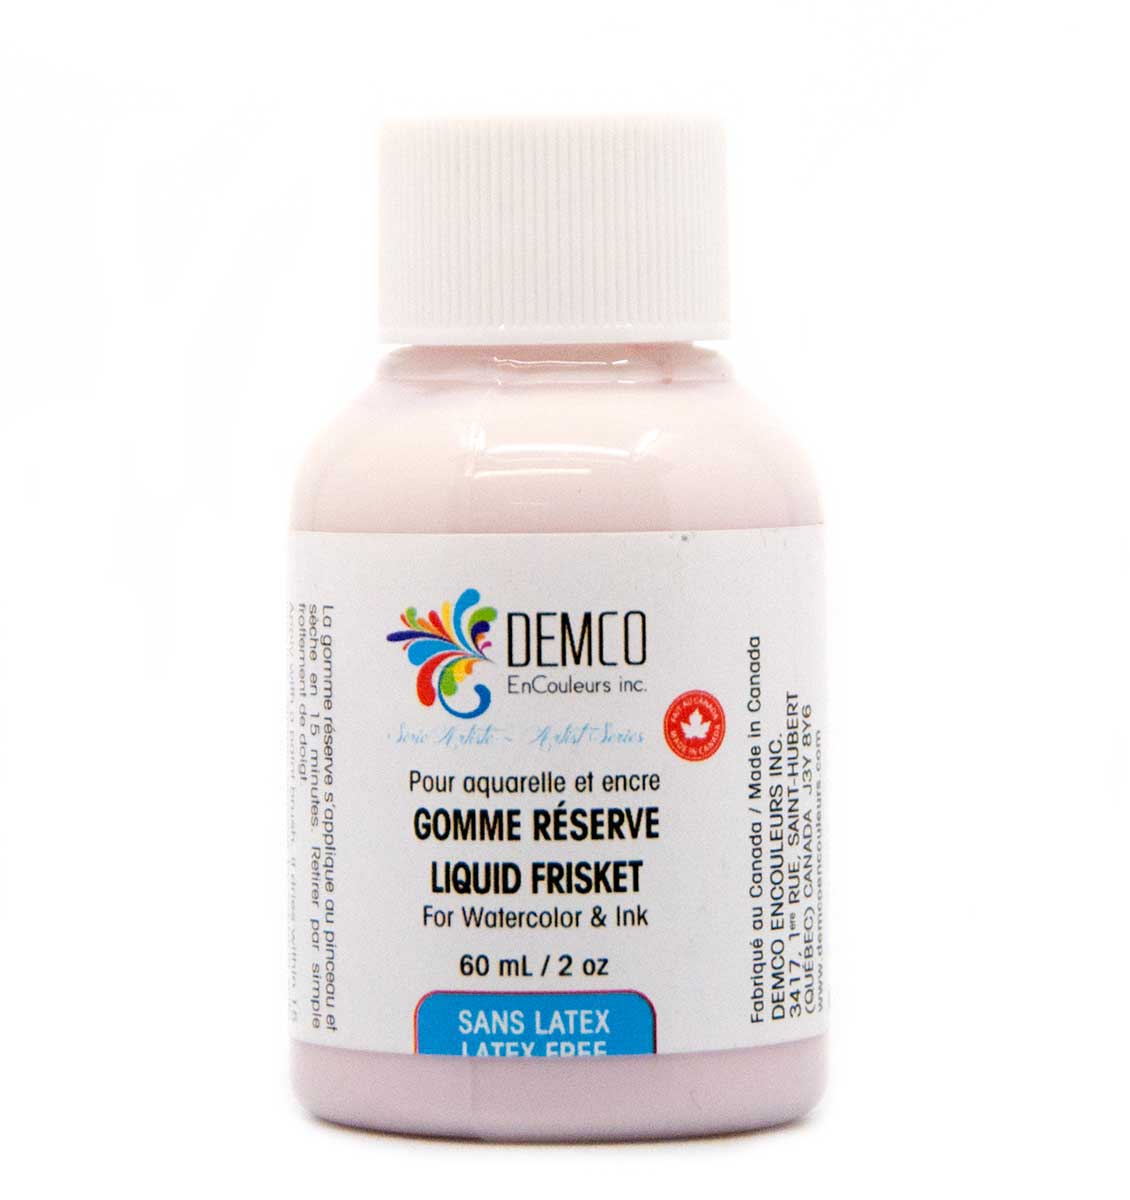 Demco Frisket Masking Fluid Latex Free (Pink) 60 ml